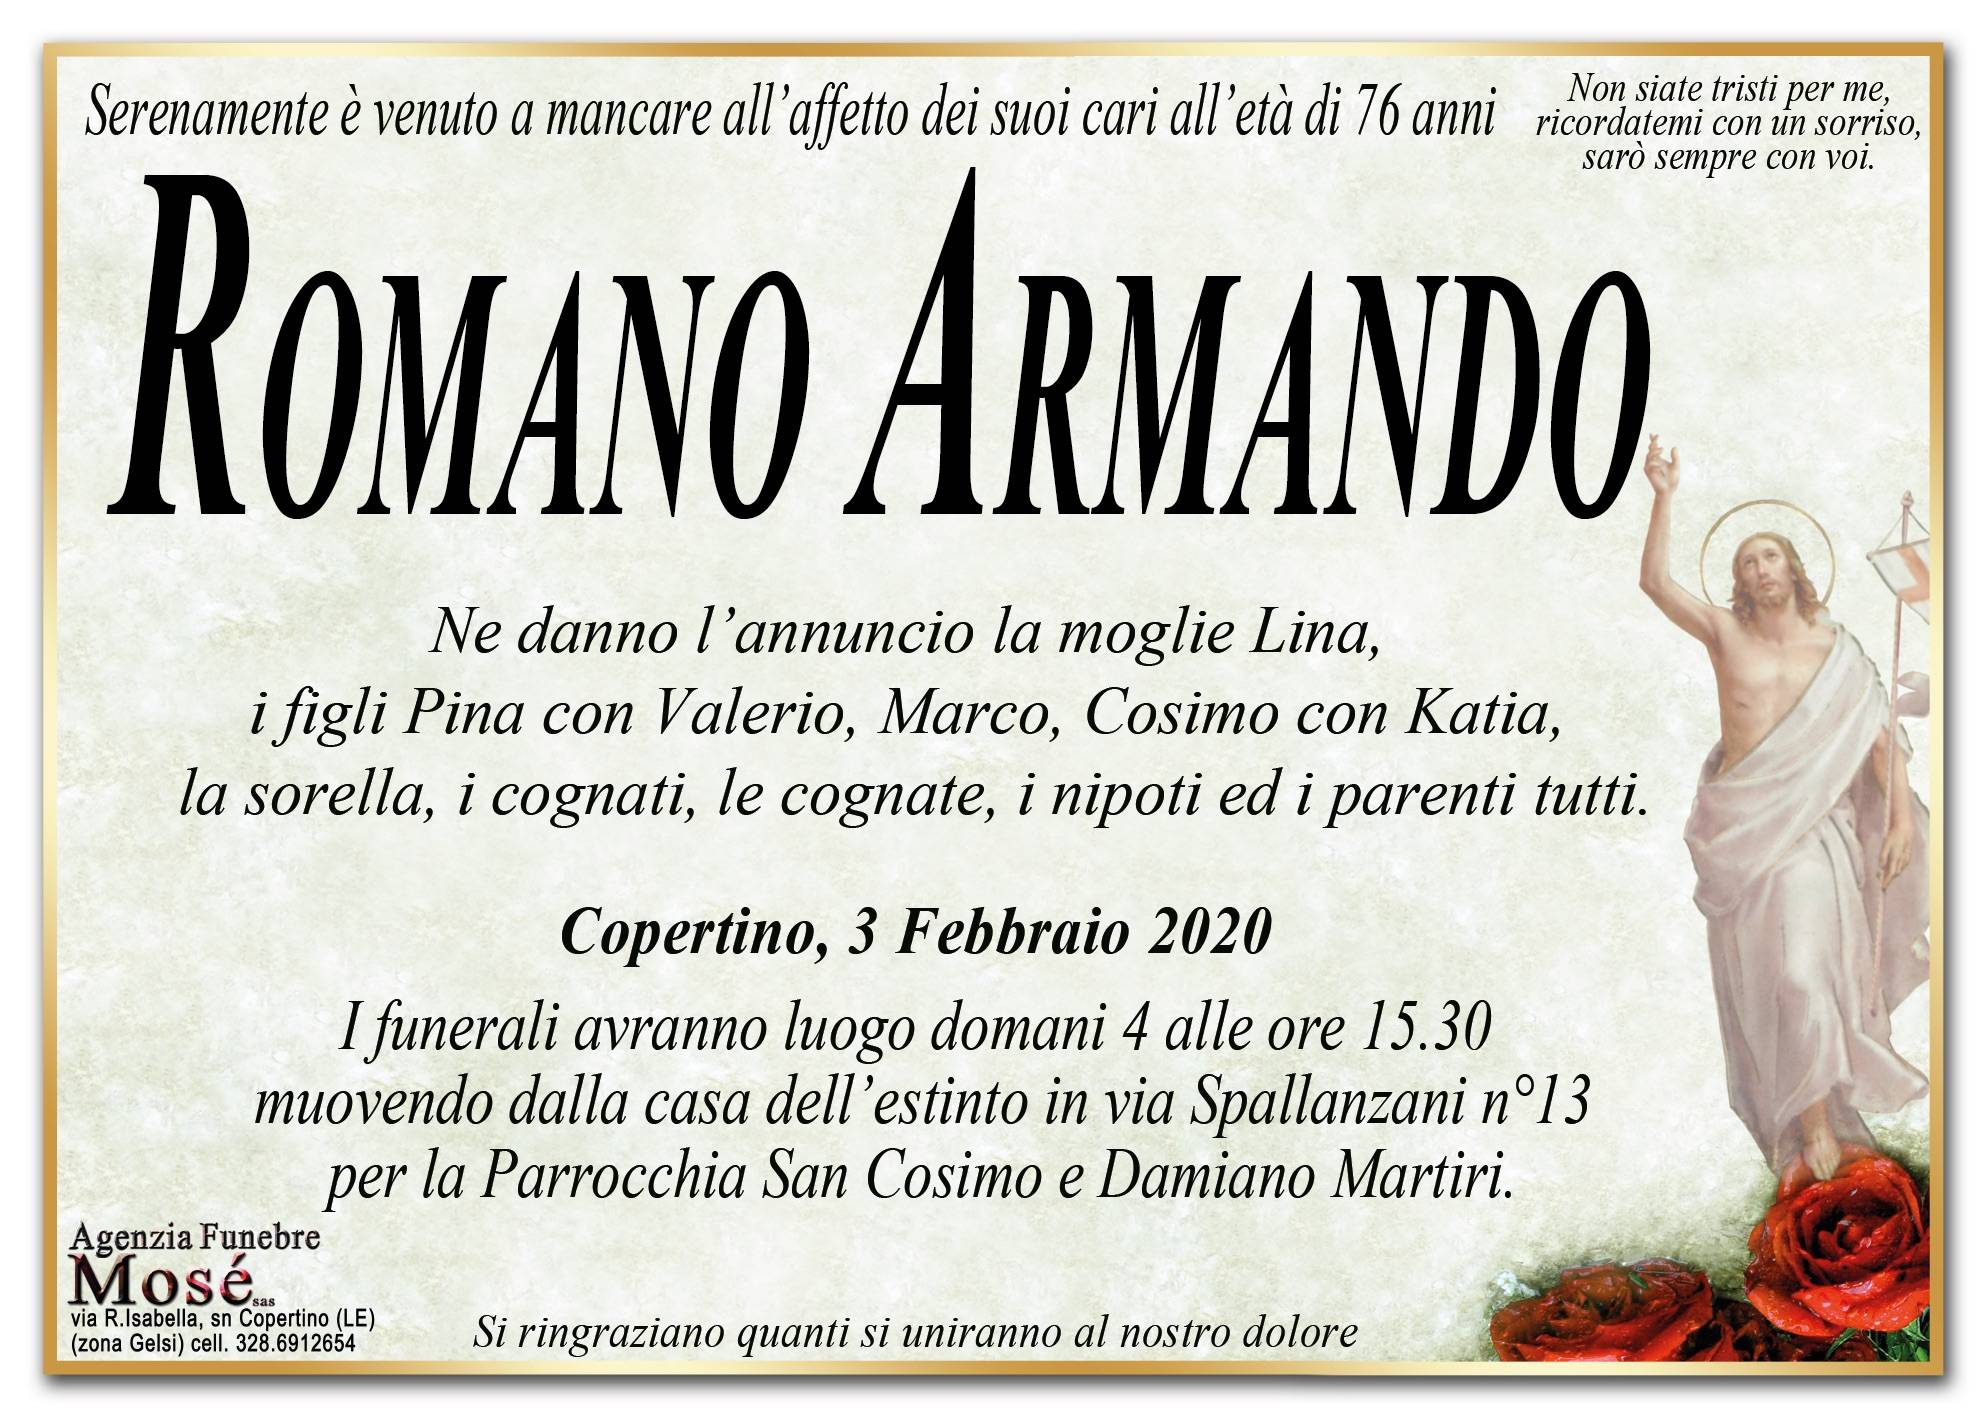 Armando Romano